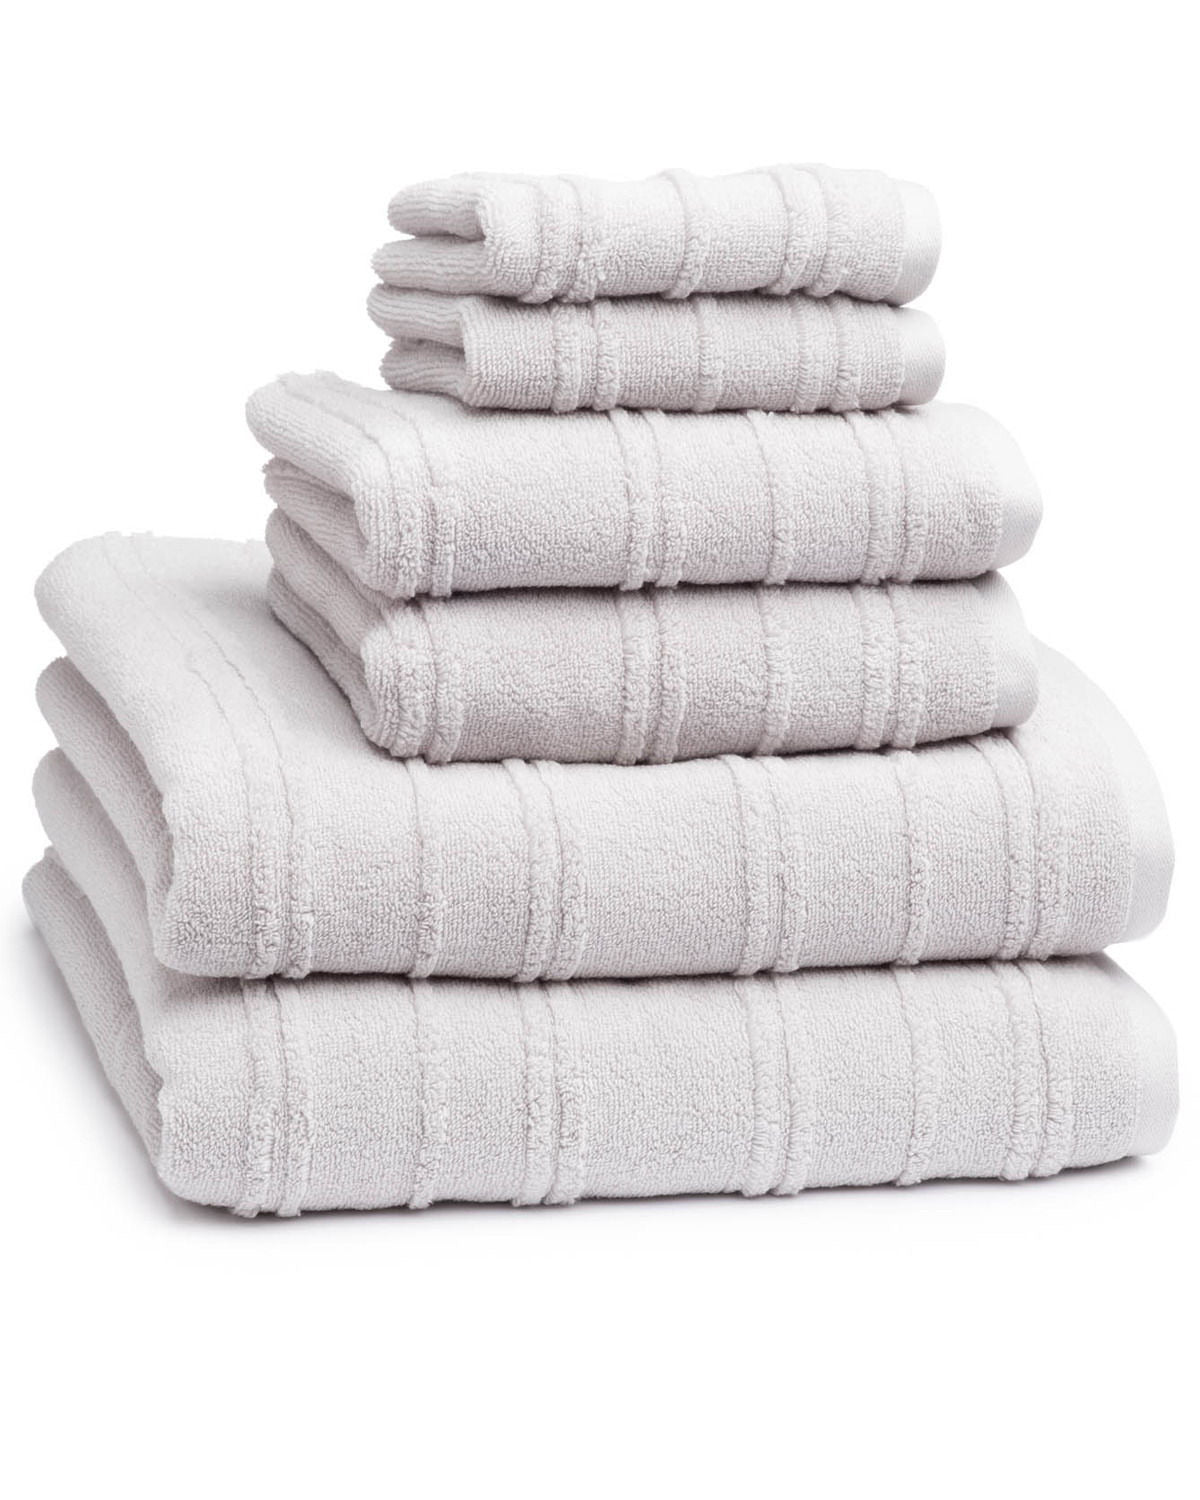 Kassatex Soho Towels